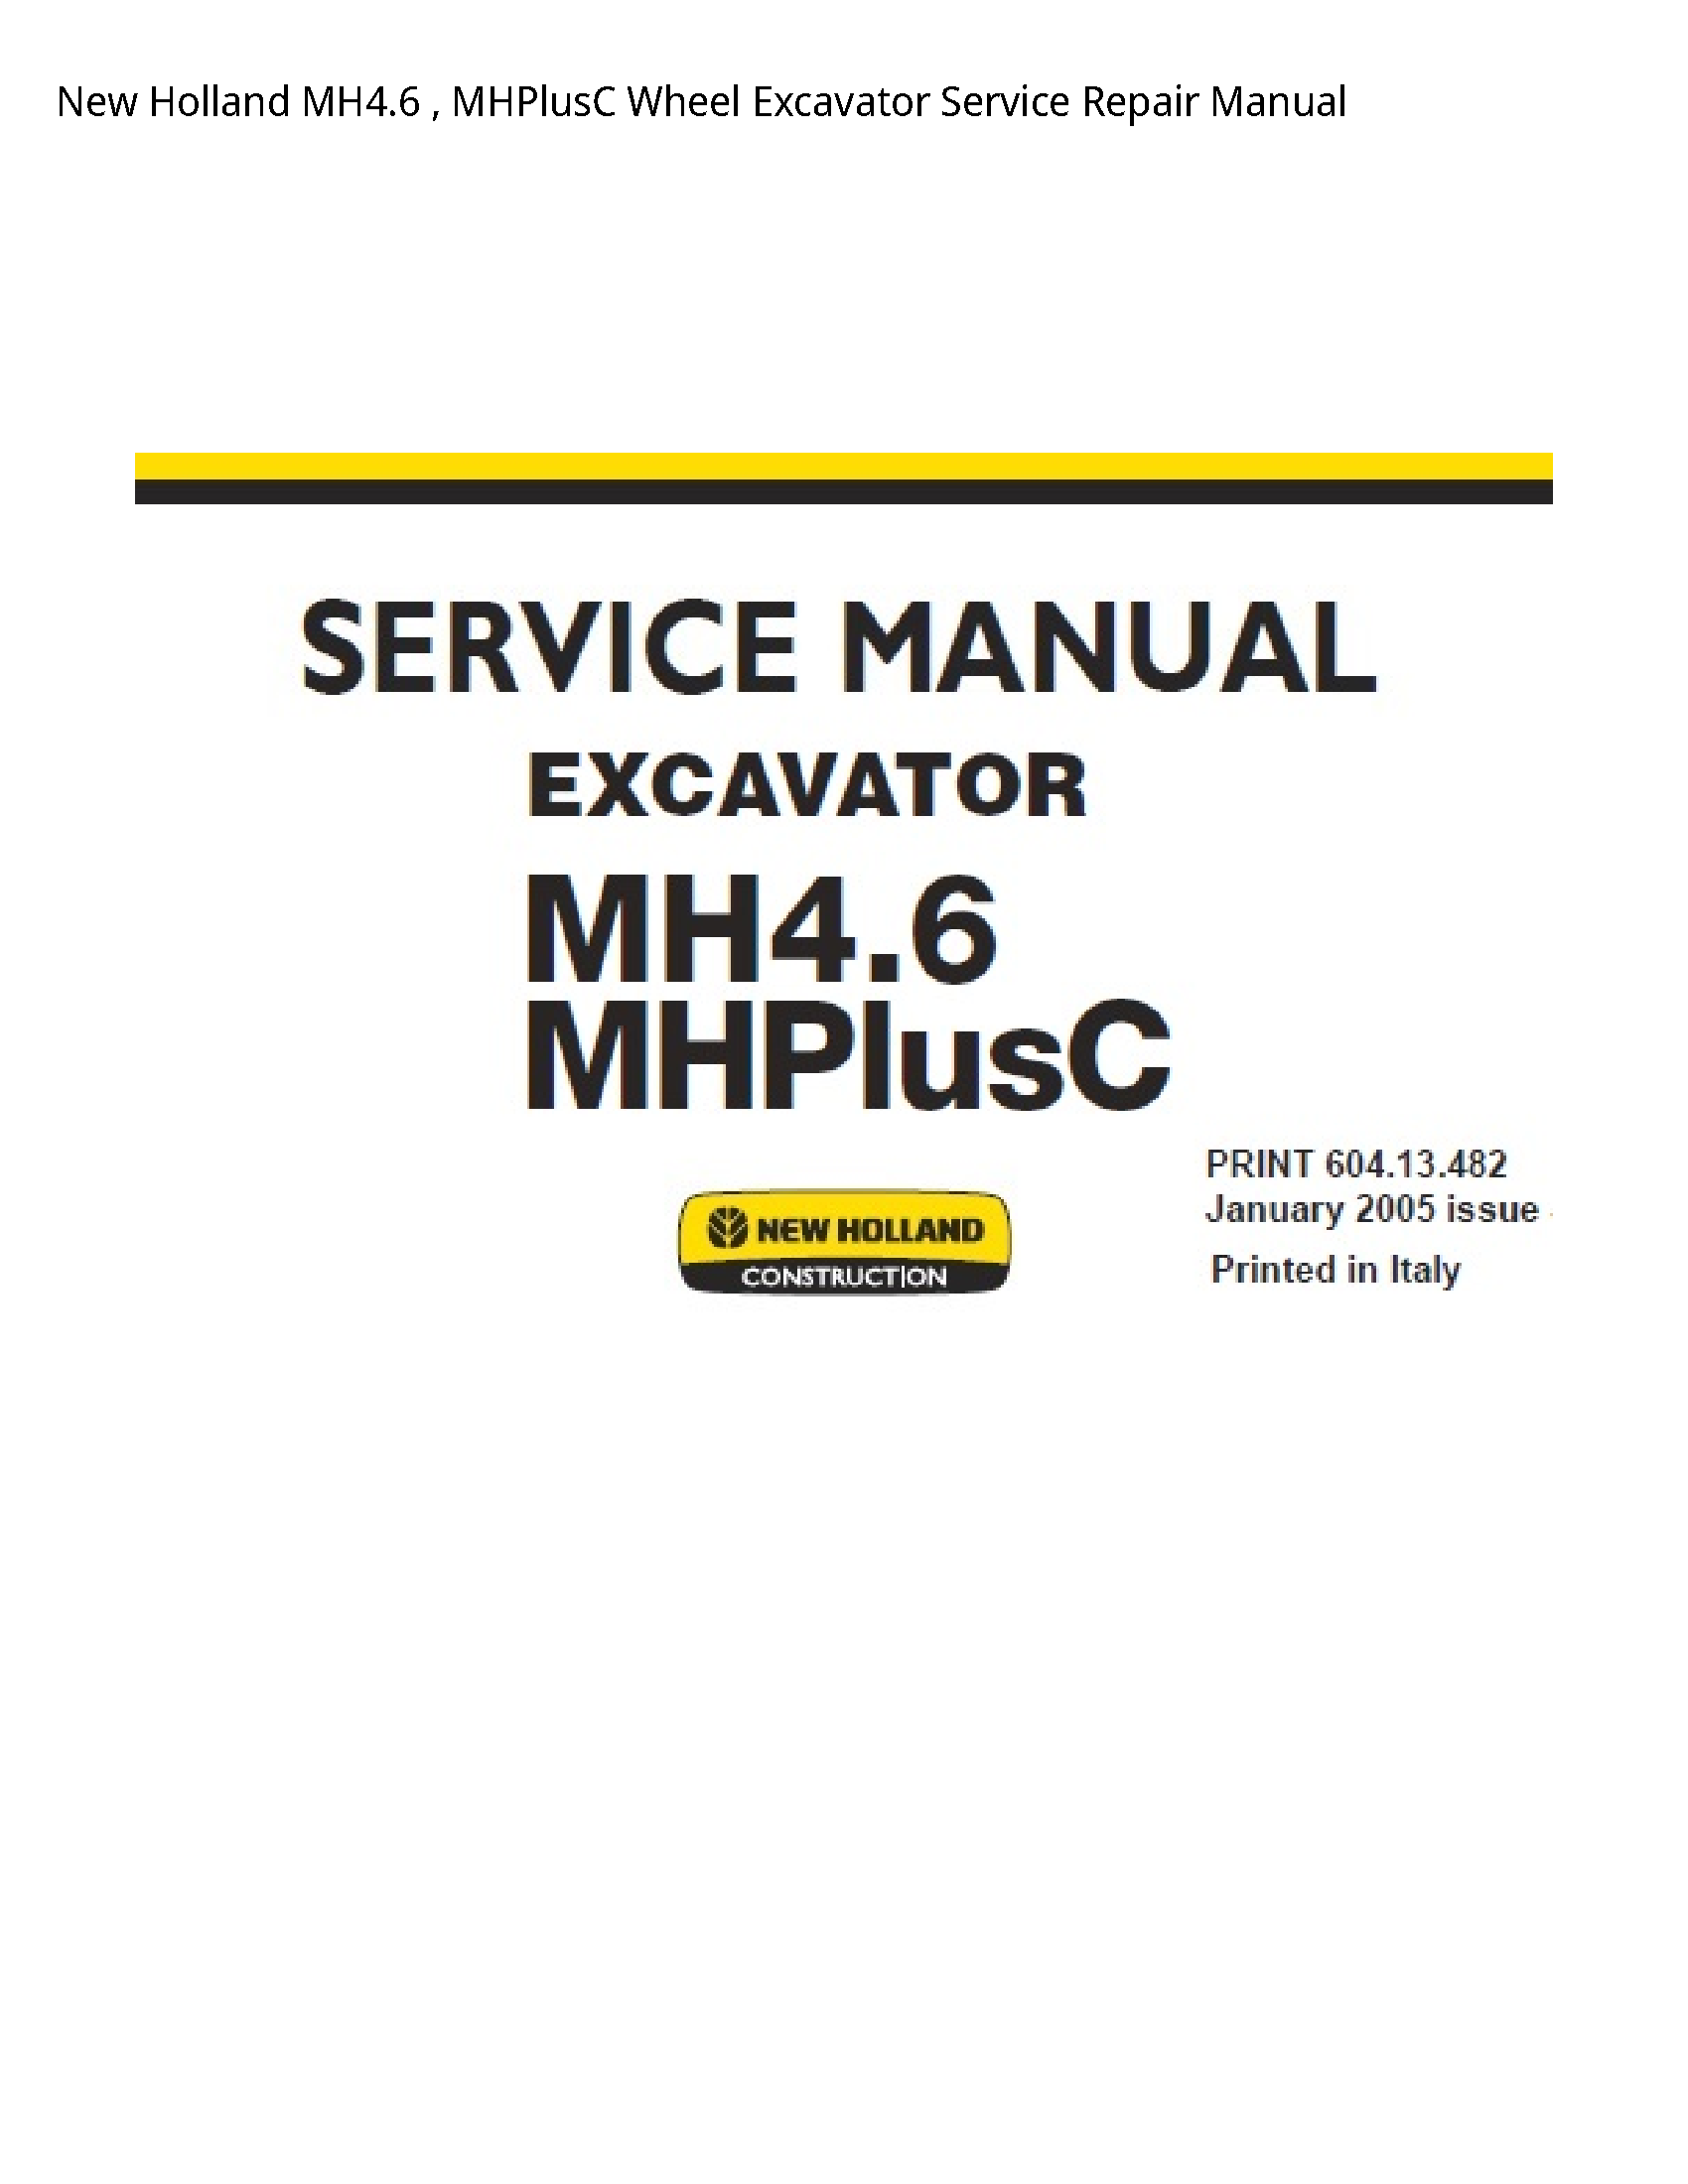 New Holland MH4.6 MHPlusC Wheel Excavator manual